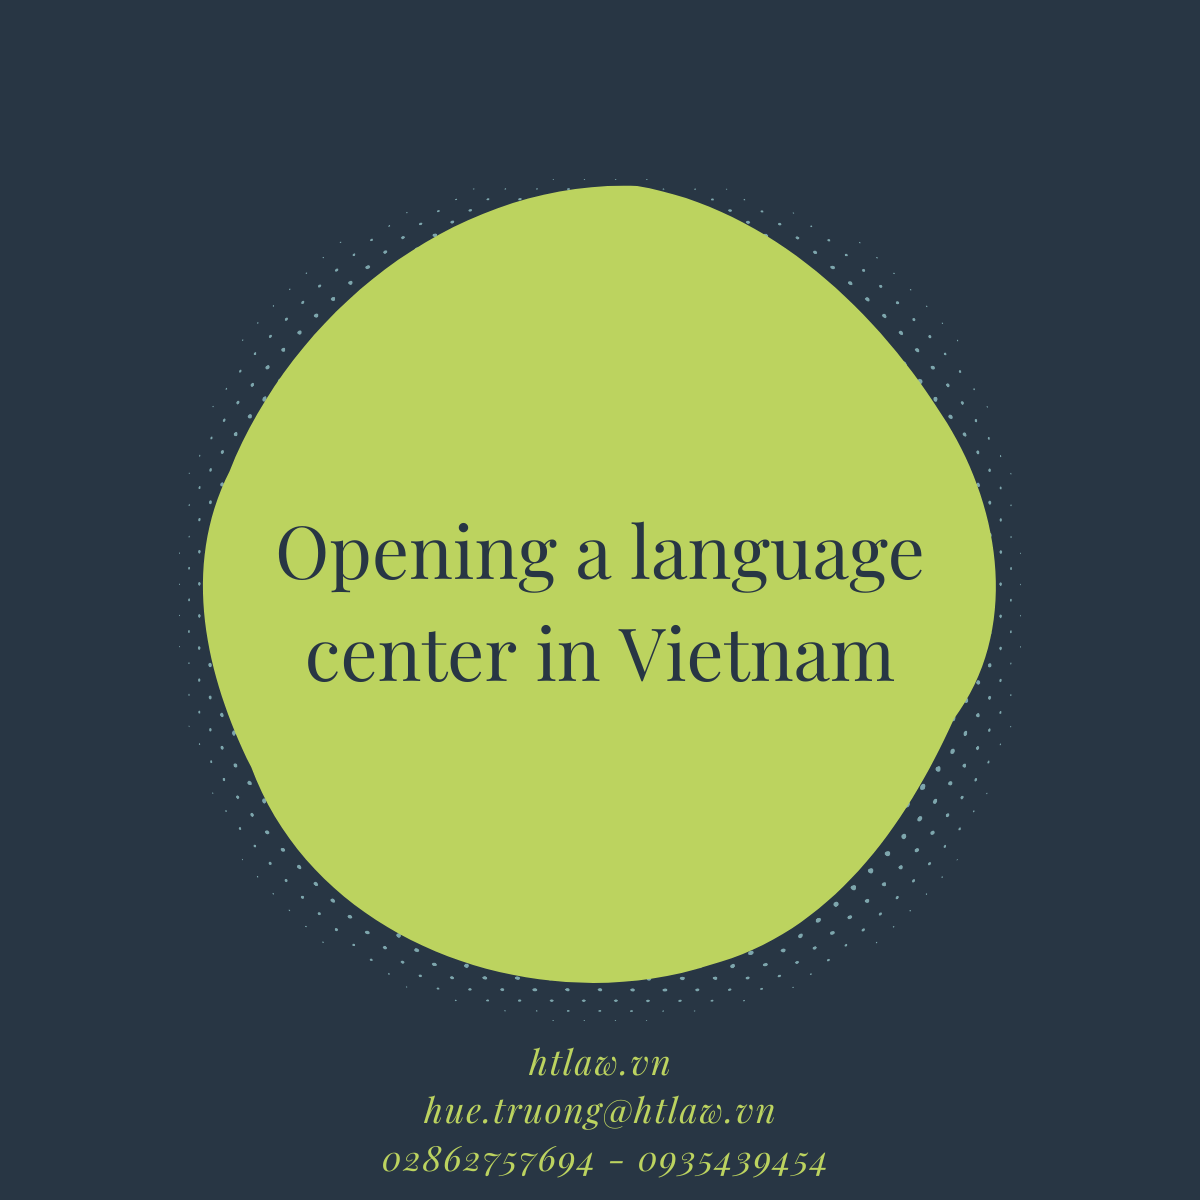 Language center - htlaw